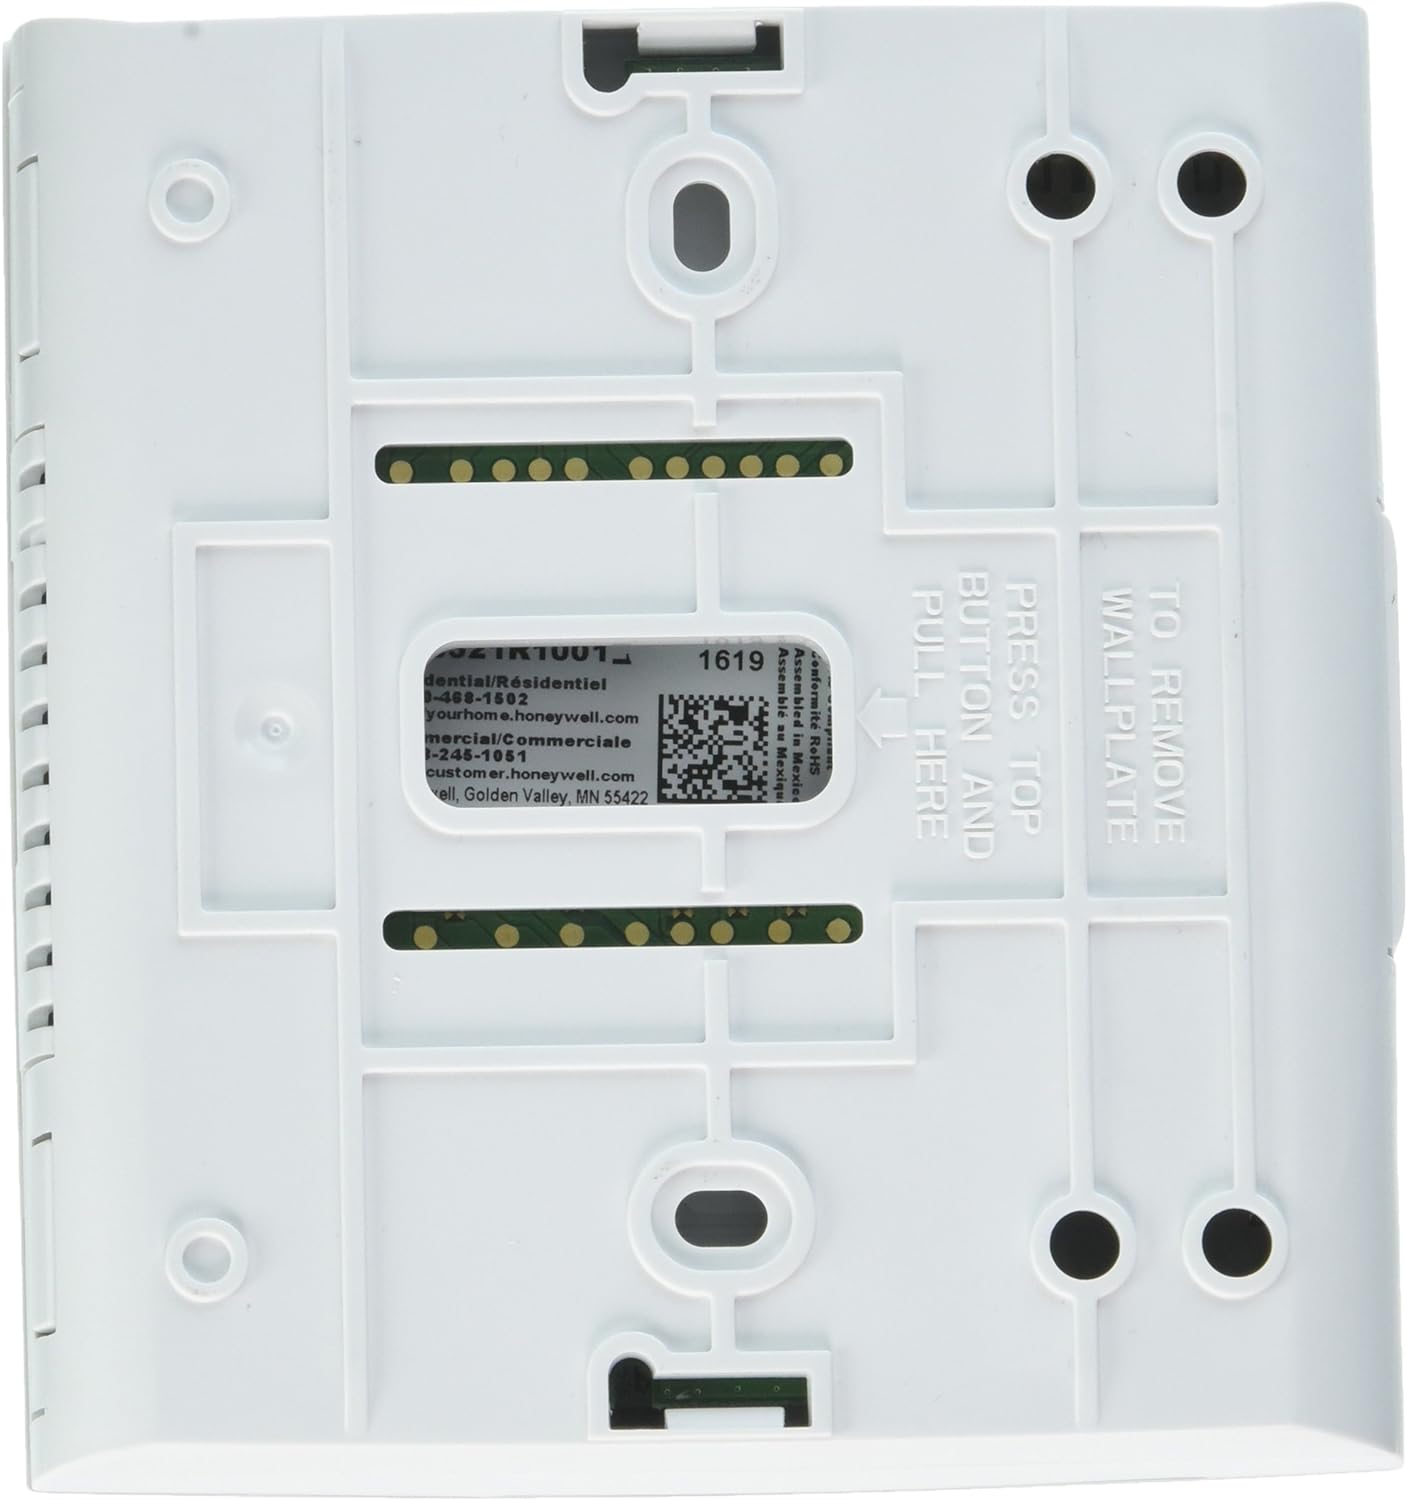 Honeywell TH8321R1001 Vision pro 8000 Thermostat (White) Bundle